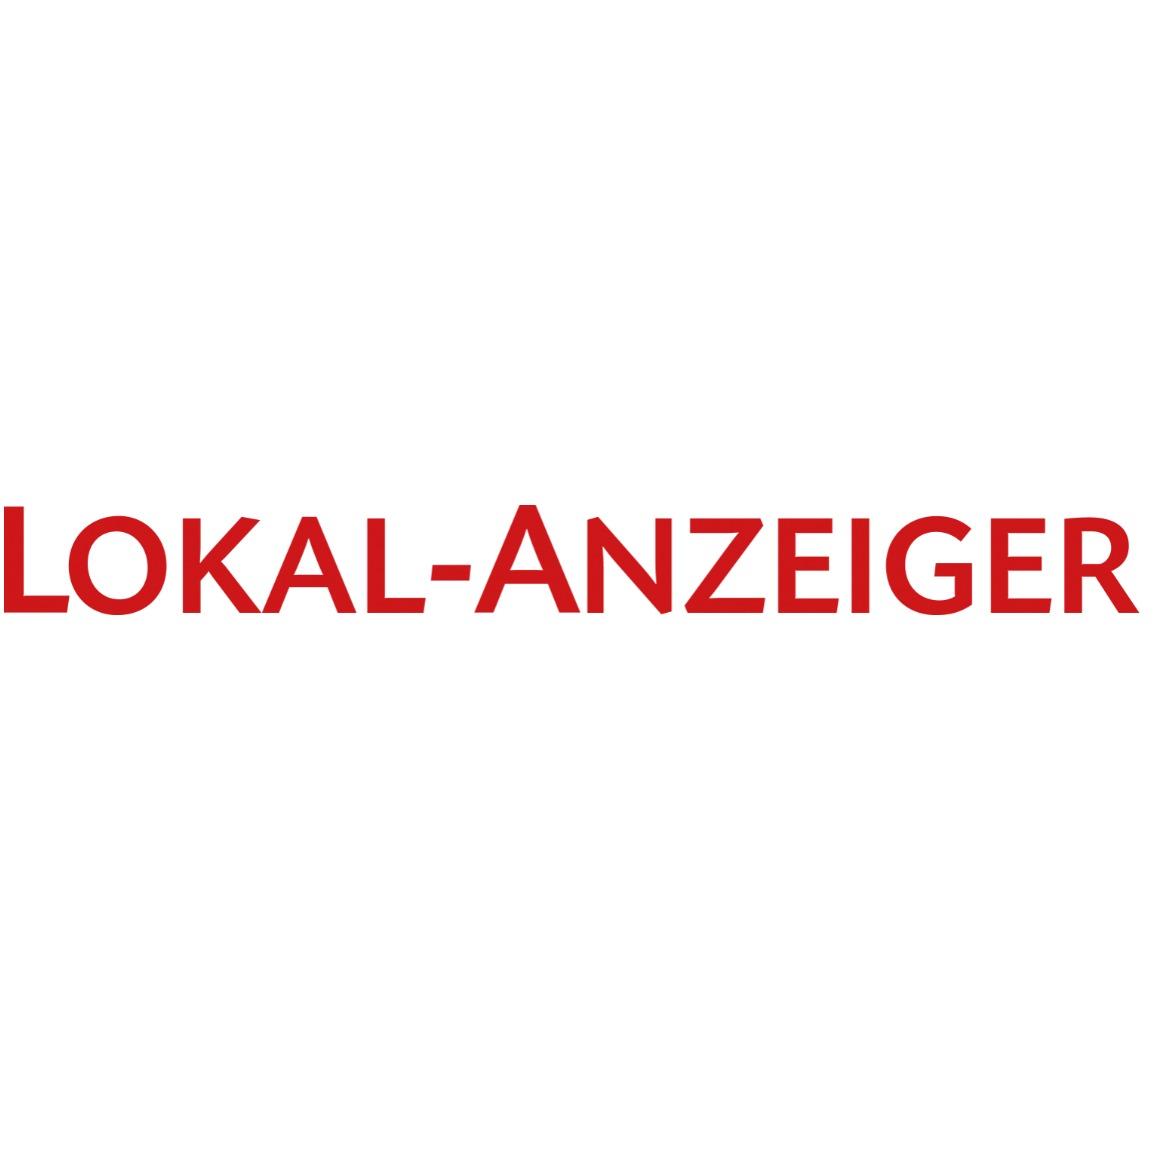 Lokalanzeiger - Publisher - Gummersbach - 02261 8197333 Germany | ShowMeLocal.com